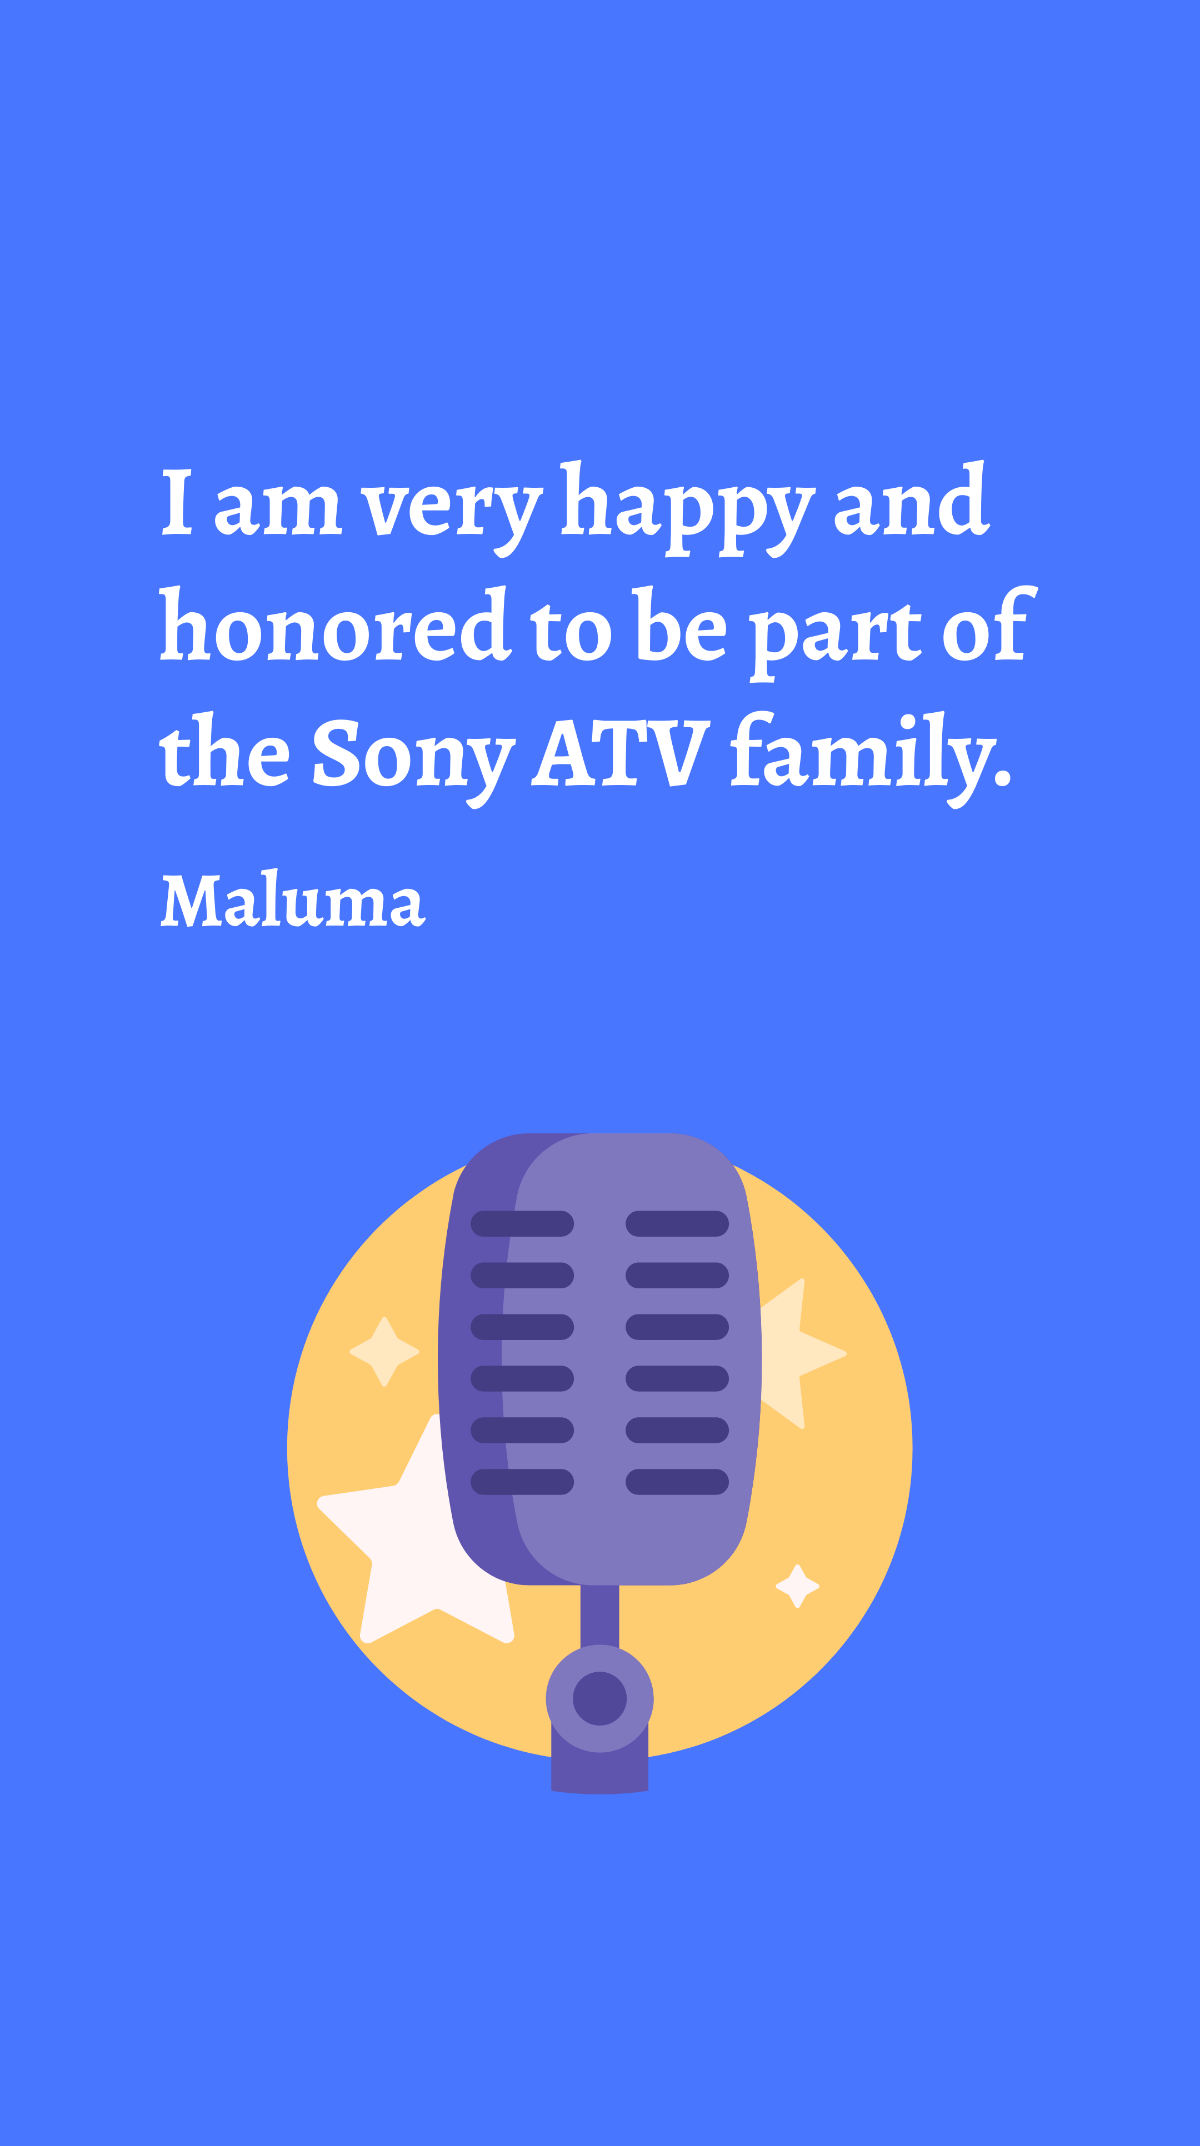 Maluma - I am very happy and honored to be part of the Sony ATV family.